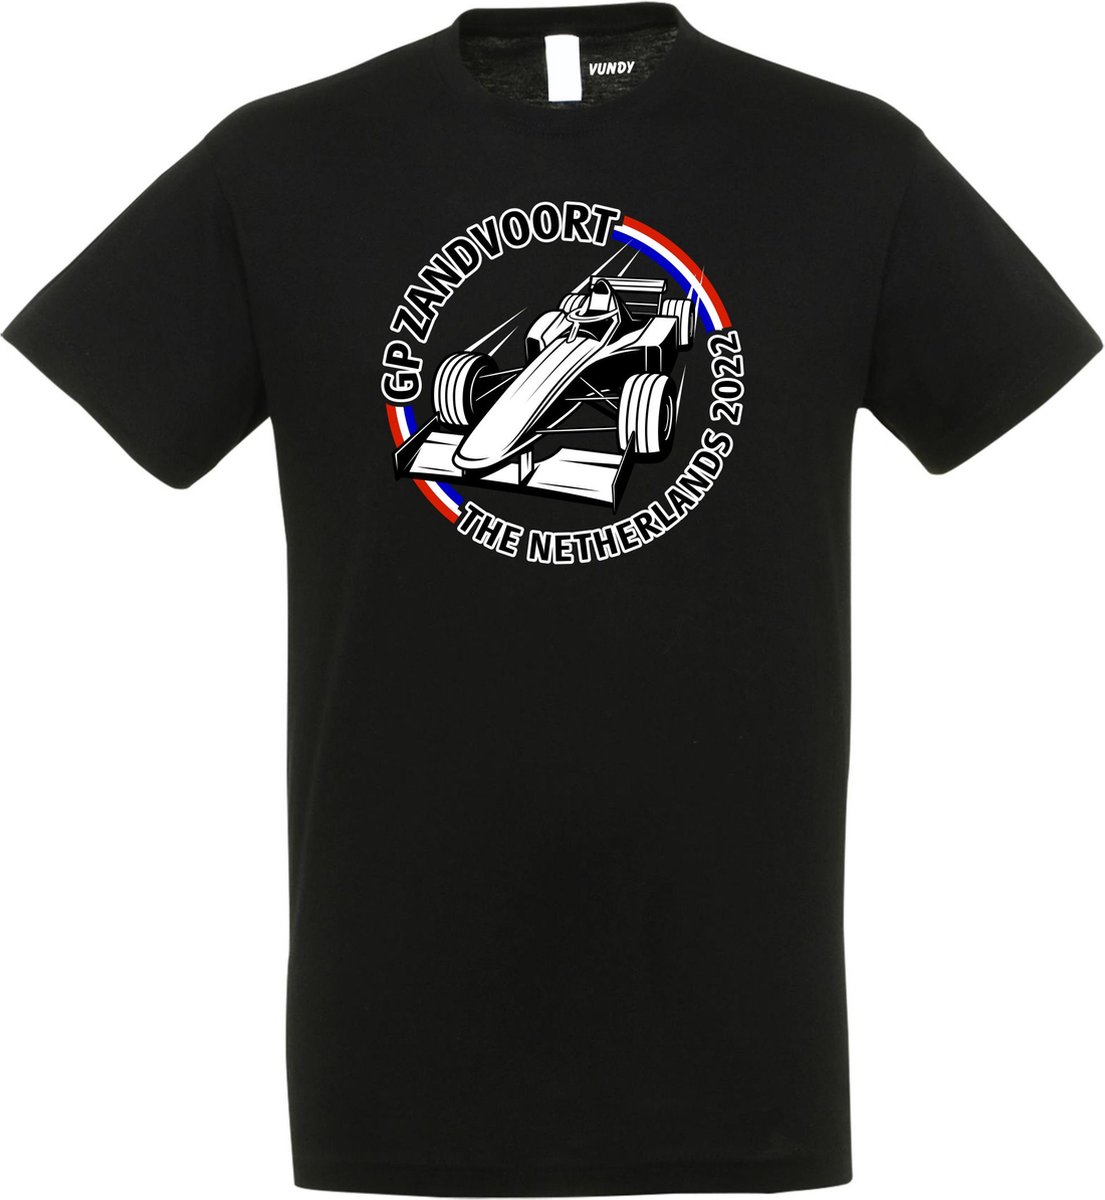 T-shirt rond GP Zandvoort 2022 | Max Verstappen / Red Bull Racing / Formule 1 fan | Grand Prix Circuit Zandvoort 2022 | zwart shirt | Zwart | maat 3XL